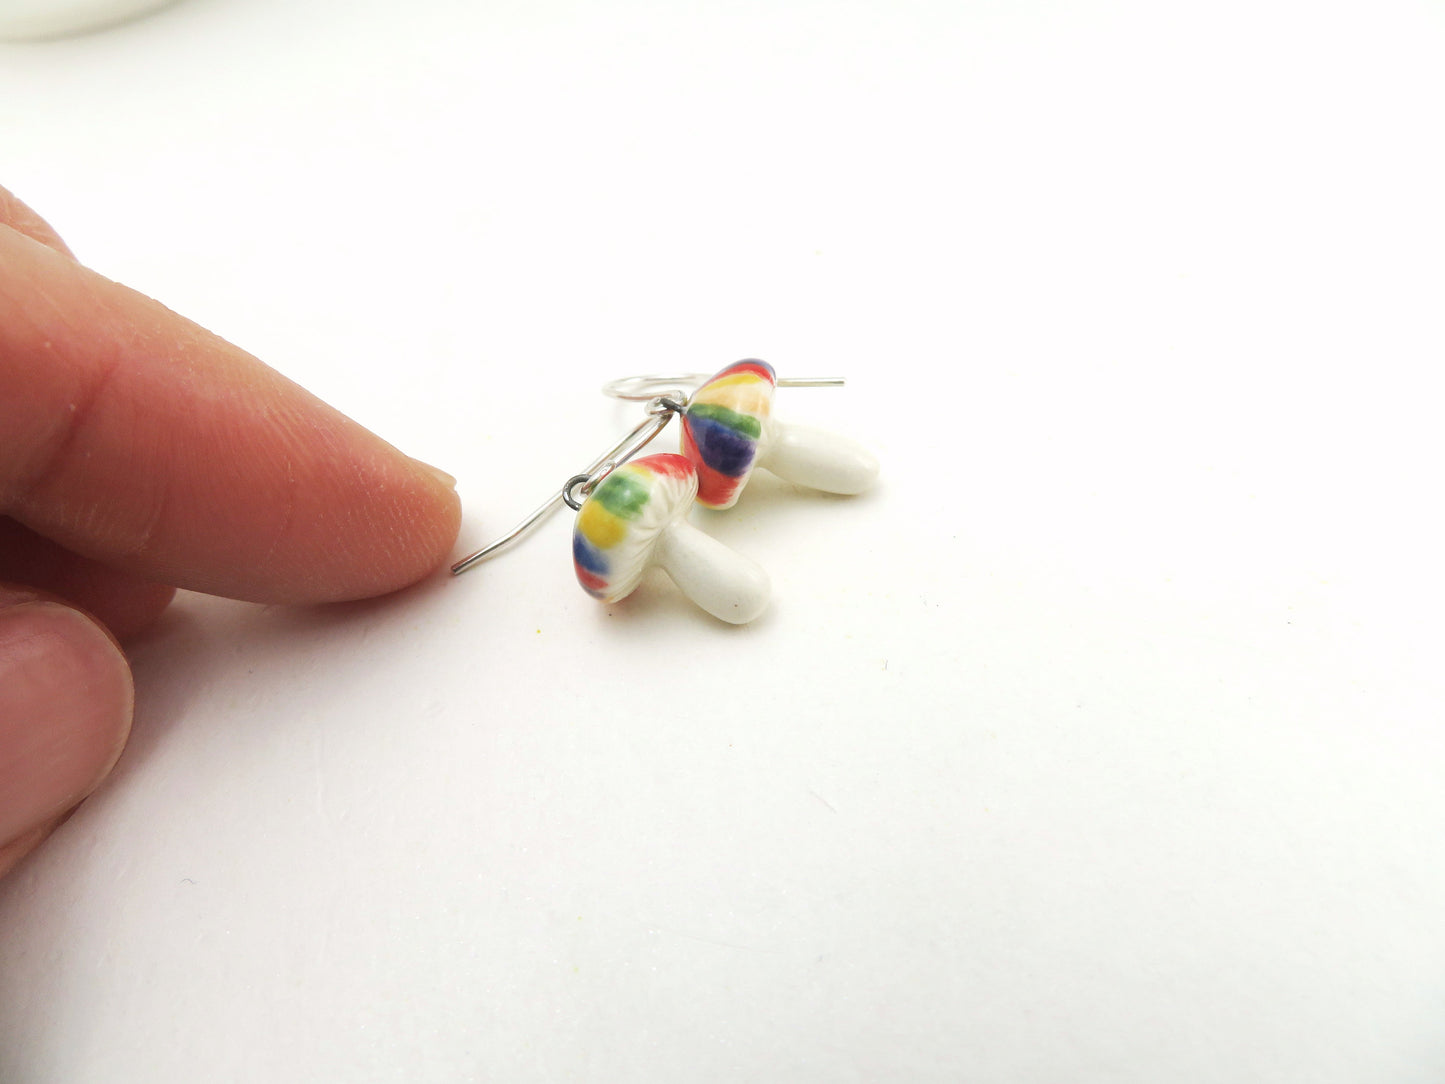 Rainbow Mushroom Dangle Earrings